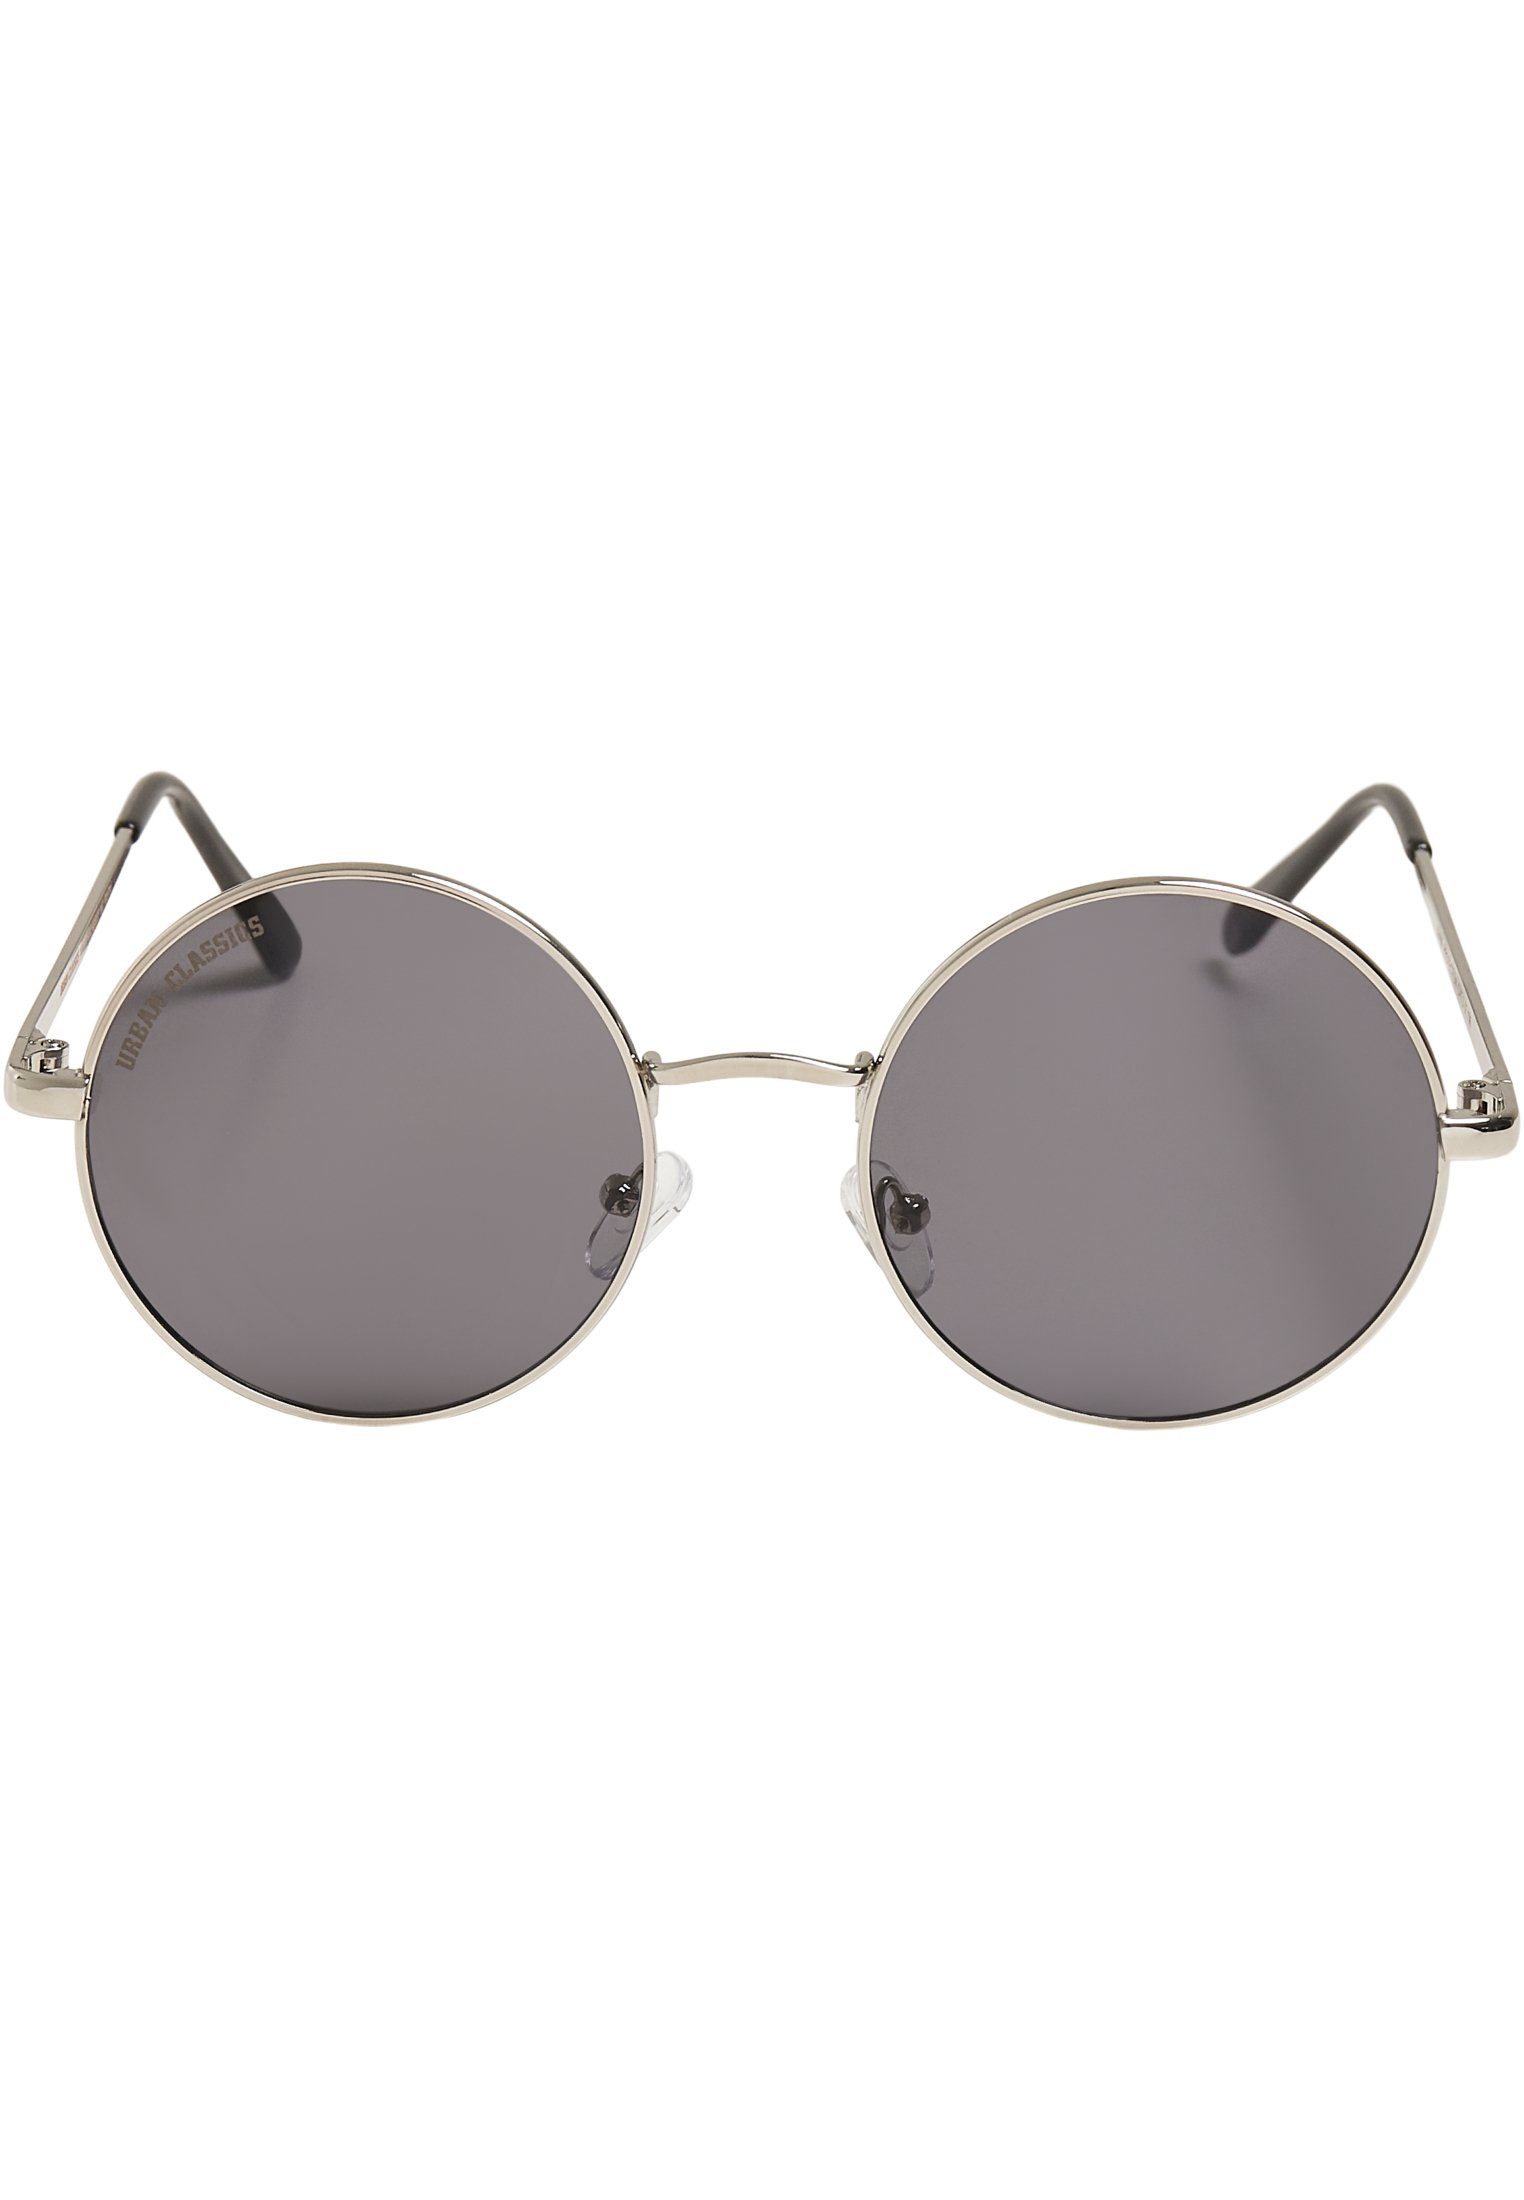 URBAN CLASSICS Sonnenbrille 107 silver/grey UC Sunglasses Accessoires